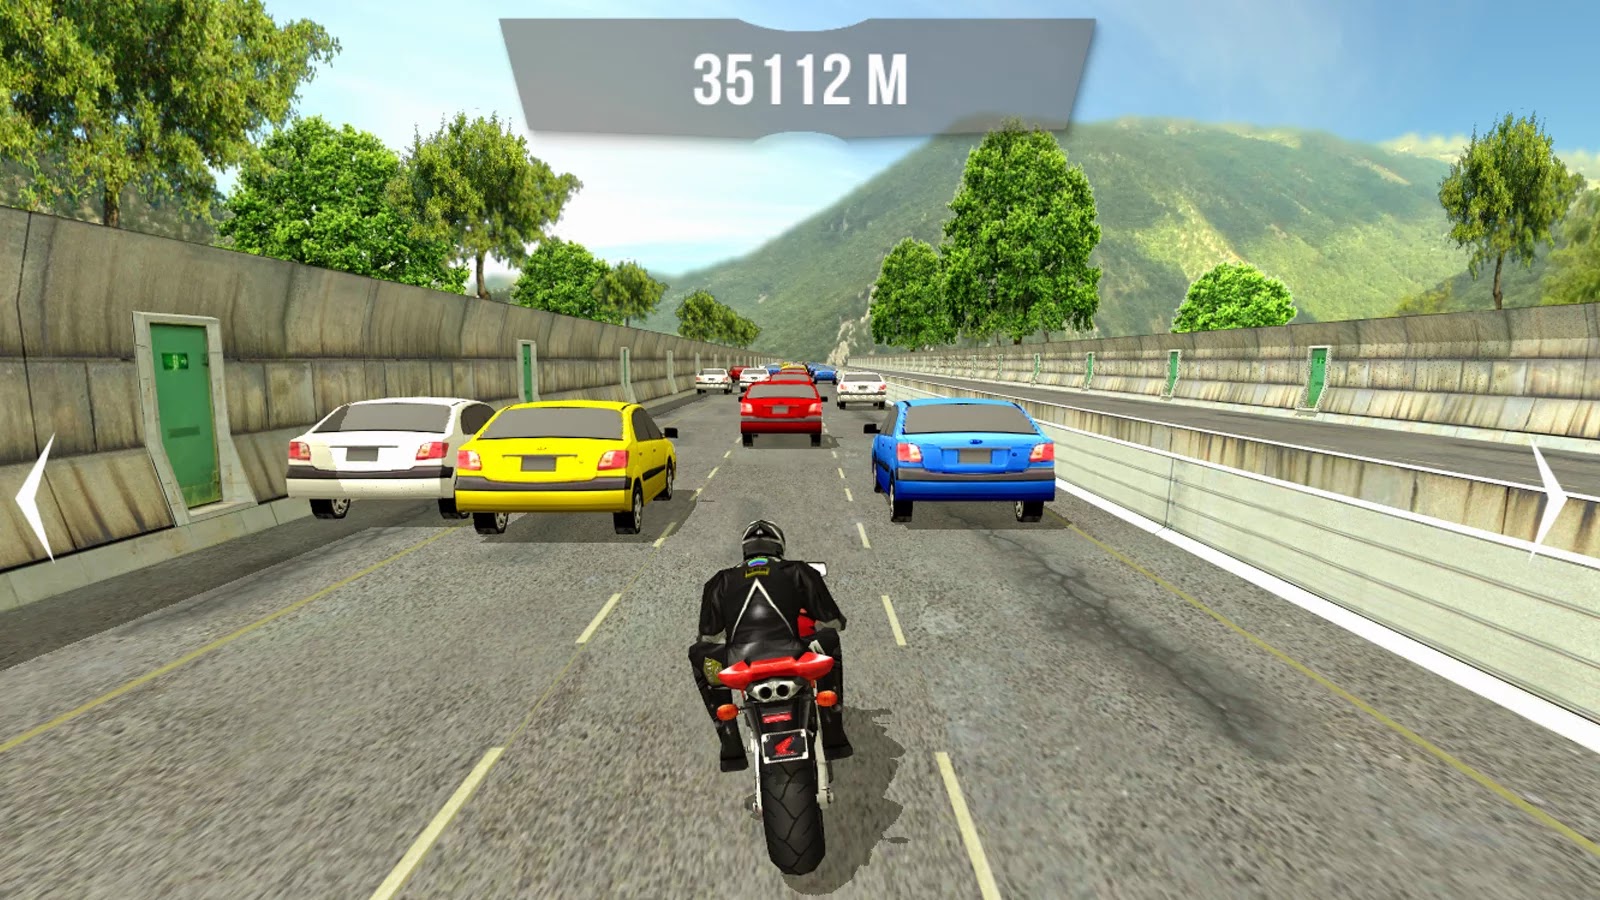 Motorbike Traffic Racer 3D v1.3 APKfor android and tablet